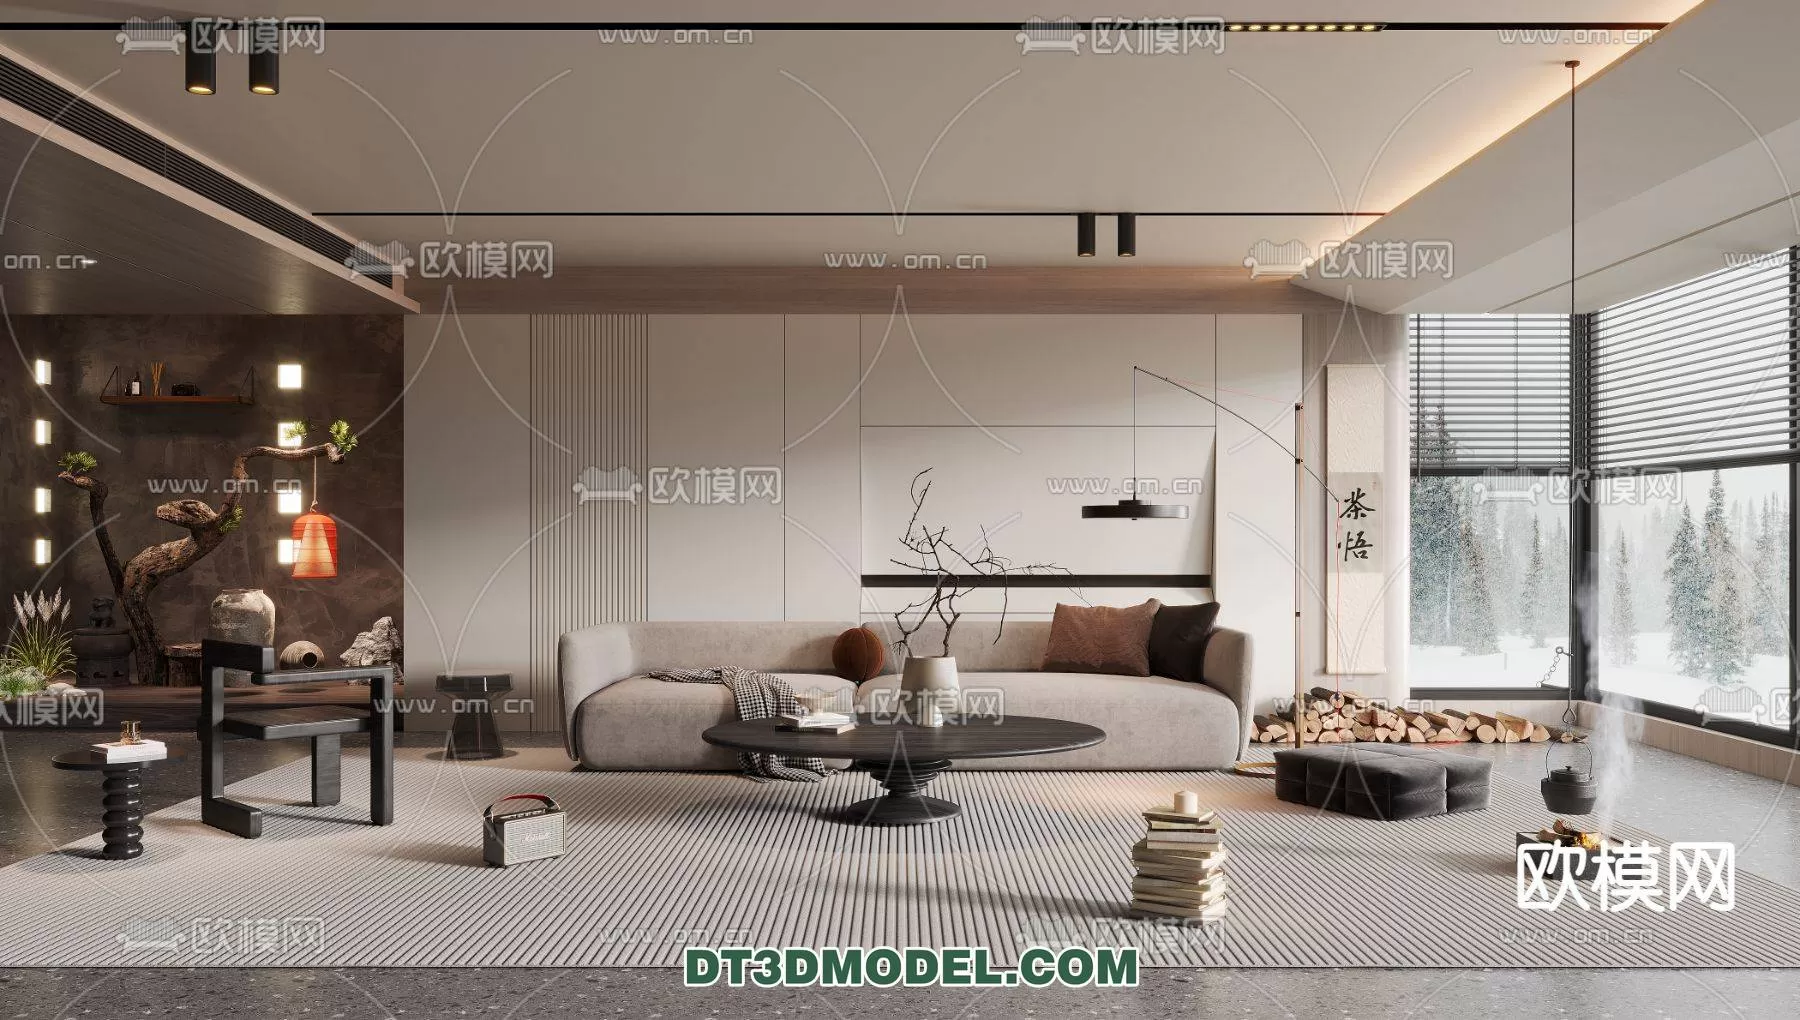 WABI SABI STYLE 3D MODELS – LIVING ROOM – 0067